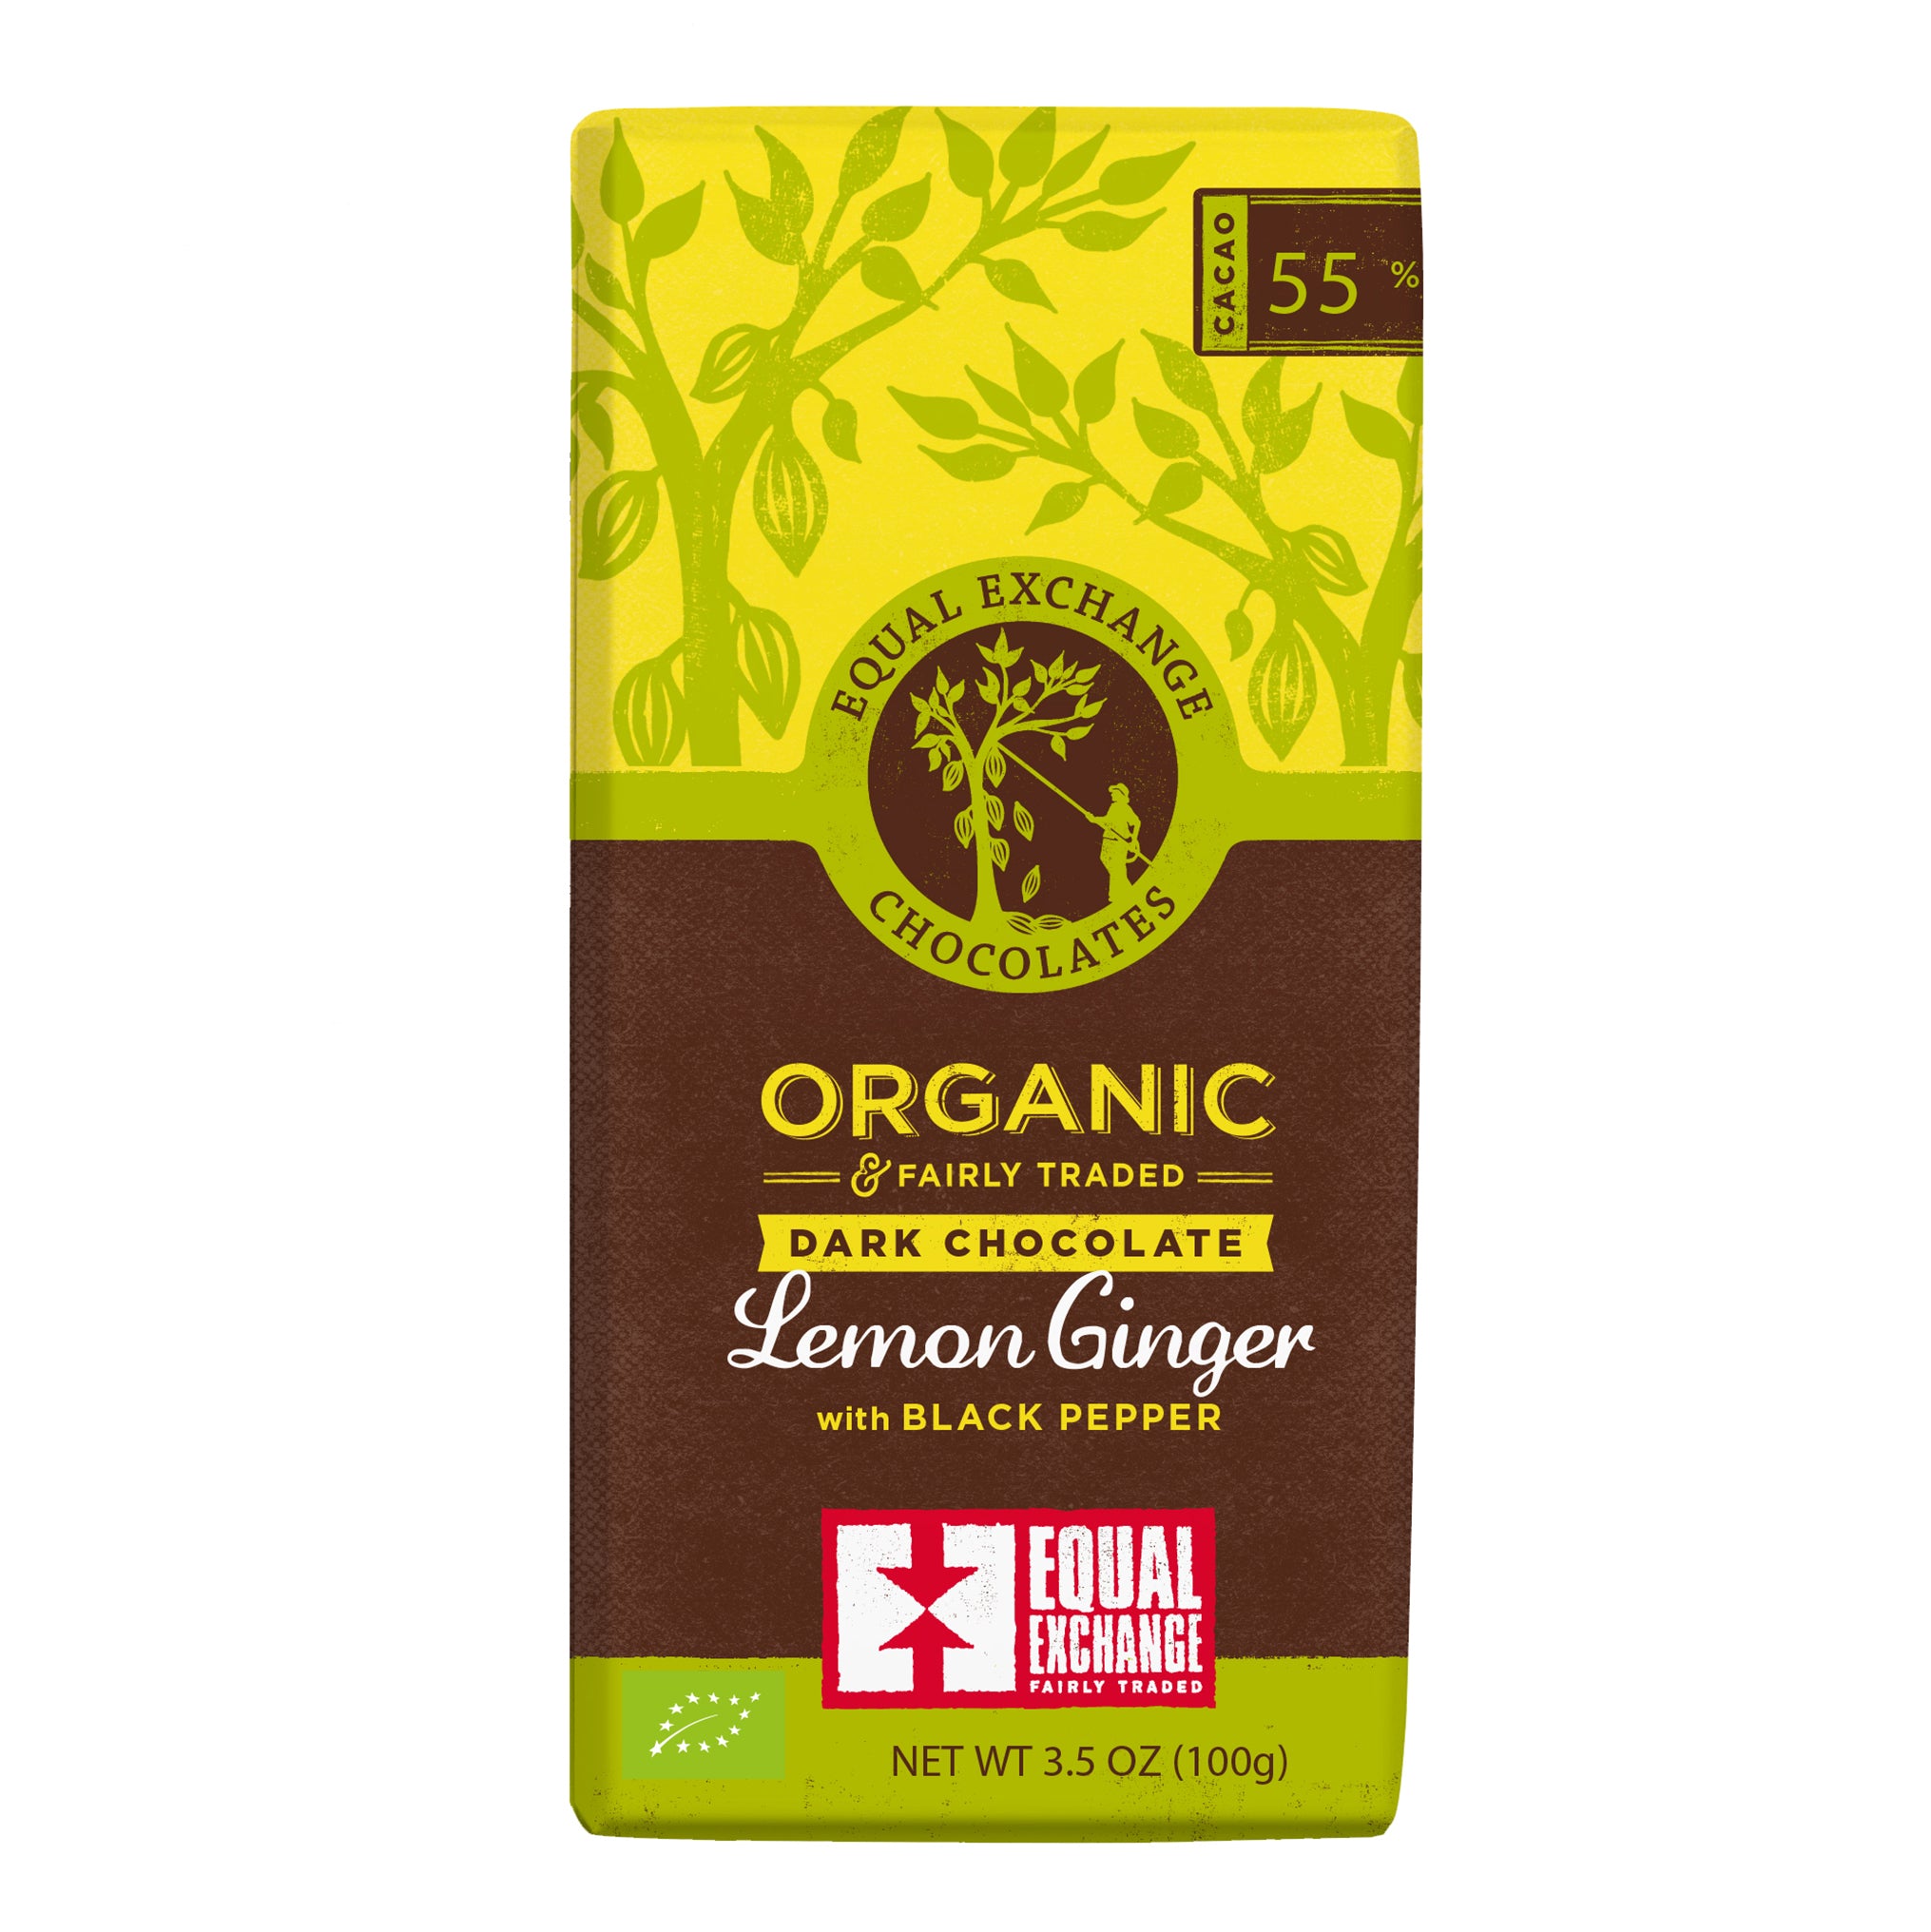 Image of Organic Lemon Ginger Chocolate with Black Pepper